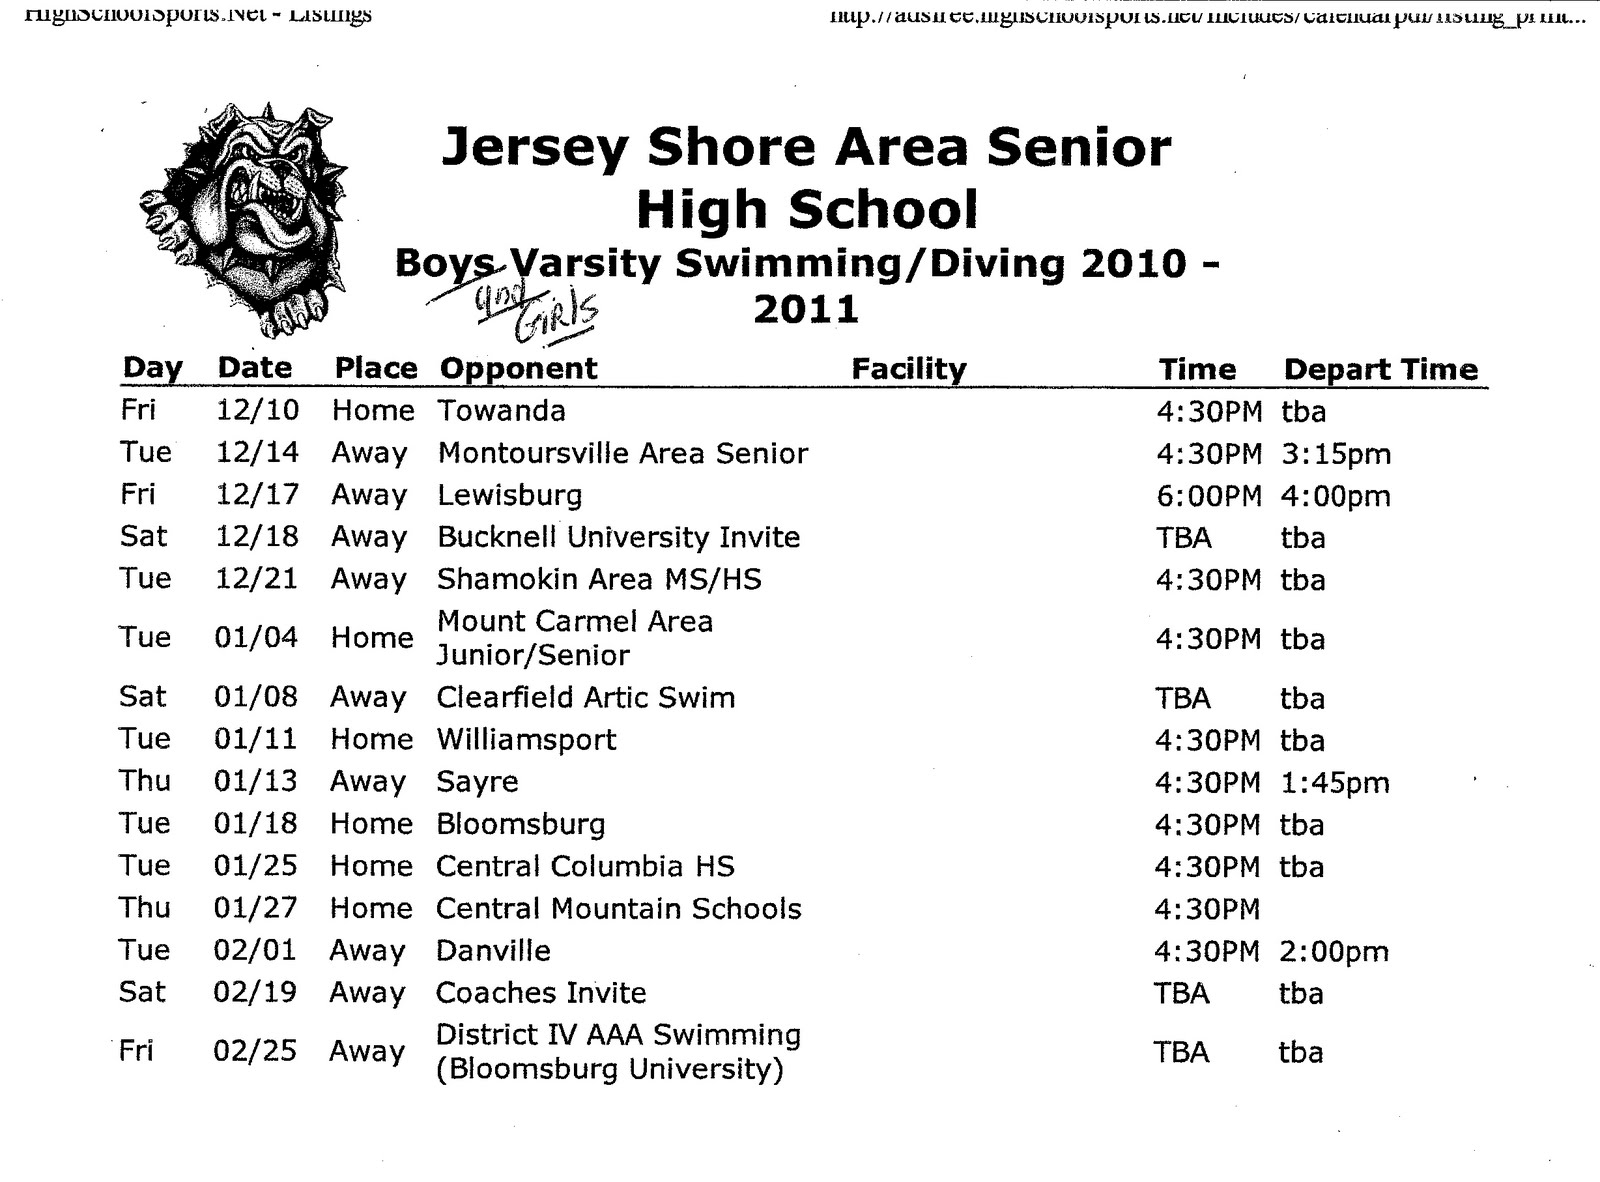 Jersey Shore (PA) Swim: Jersey Shore High School Swim Schedule Set